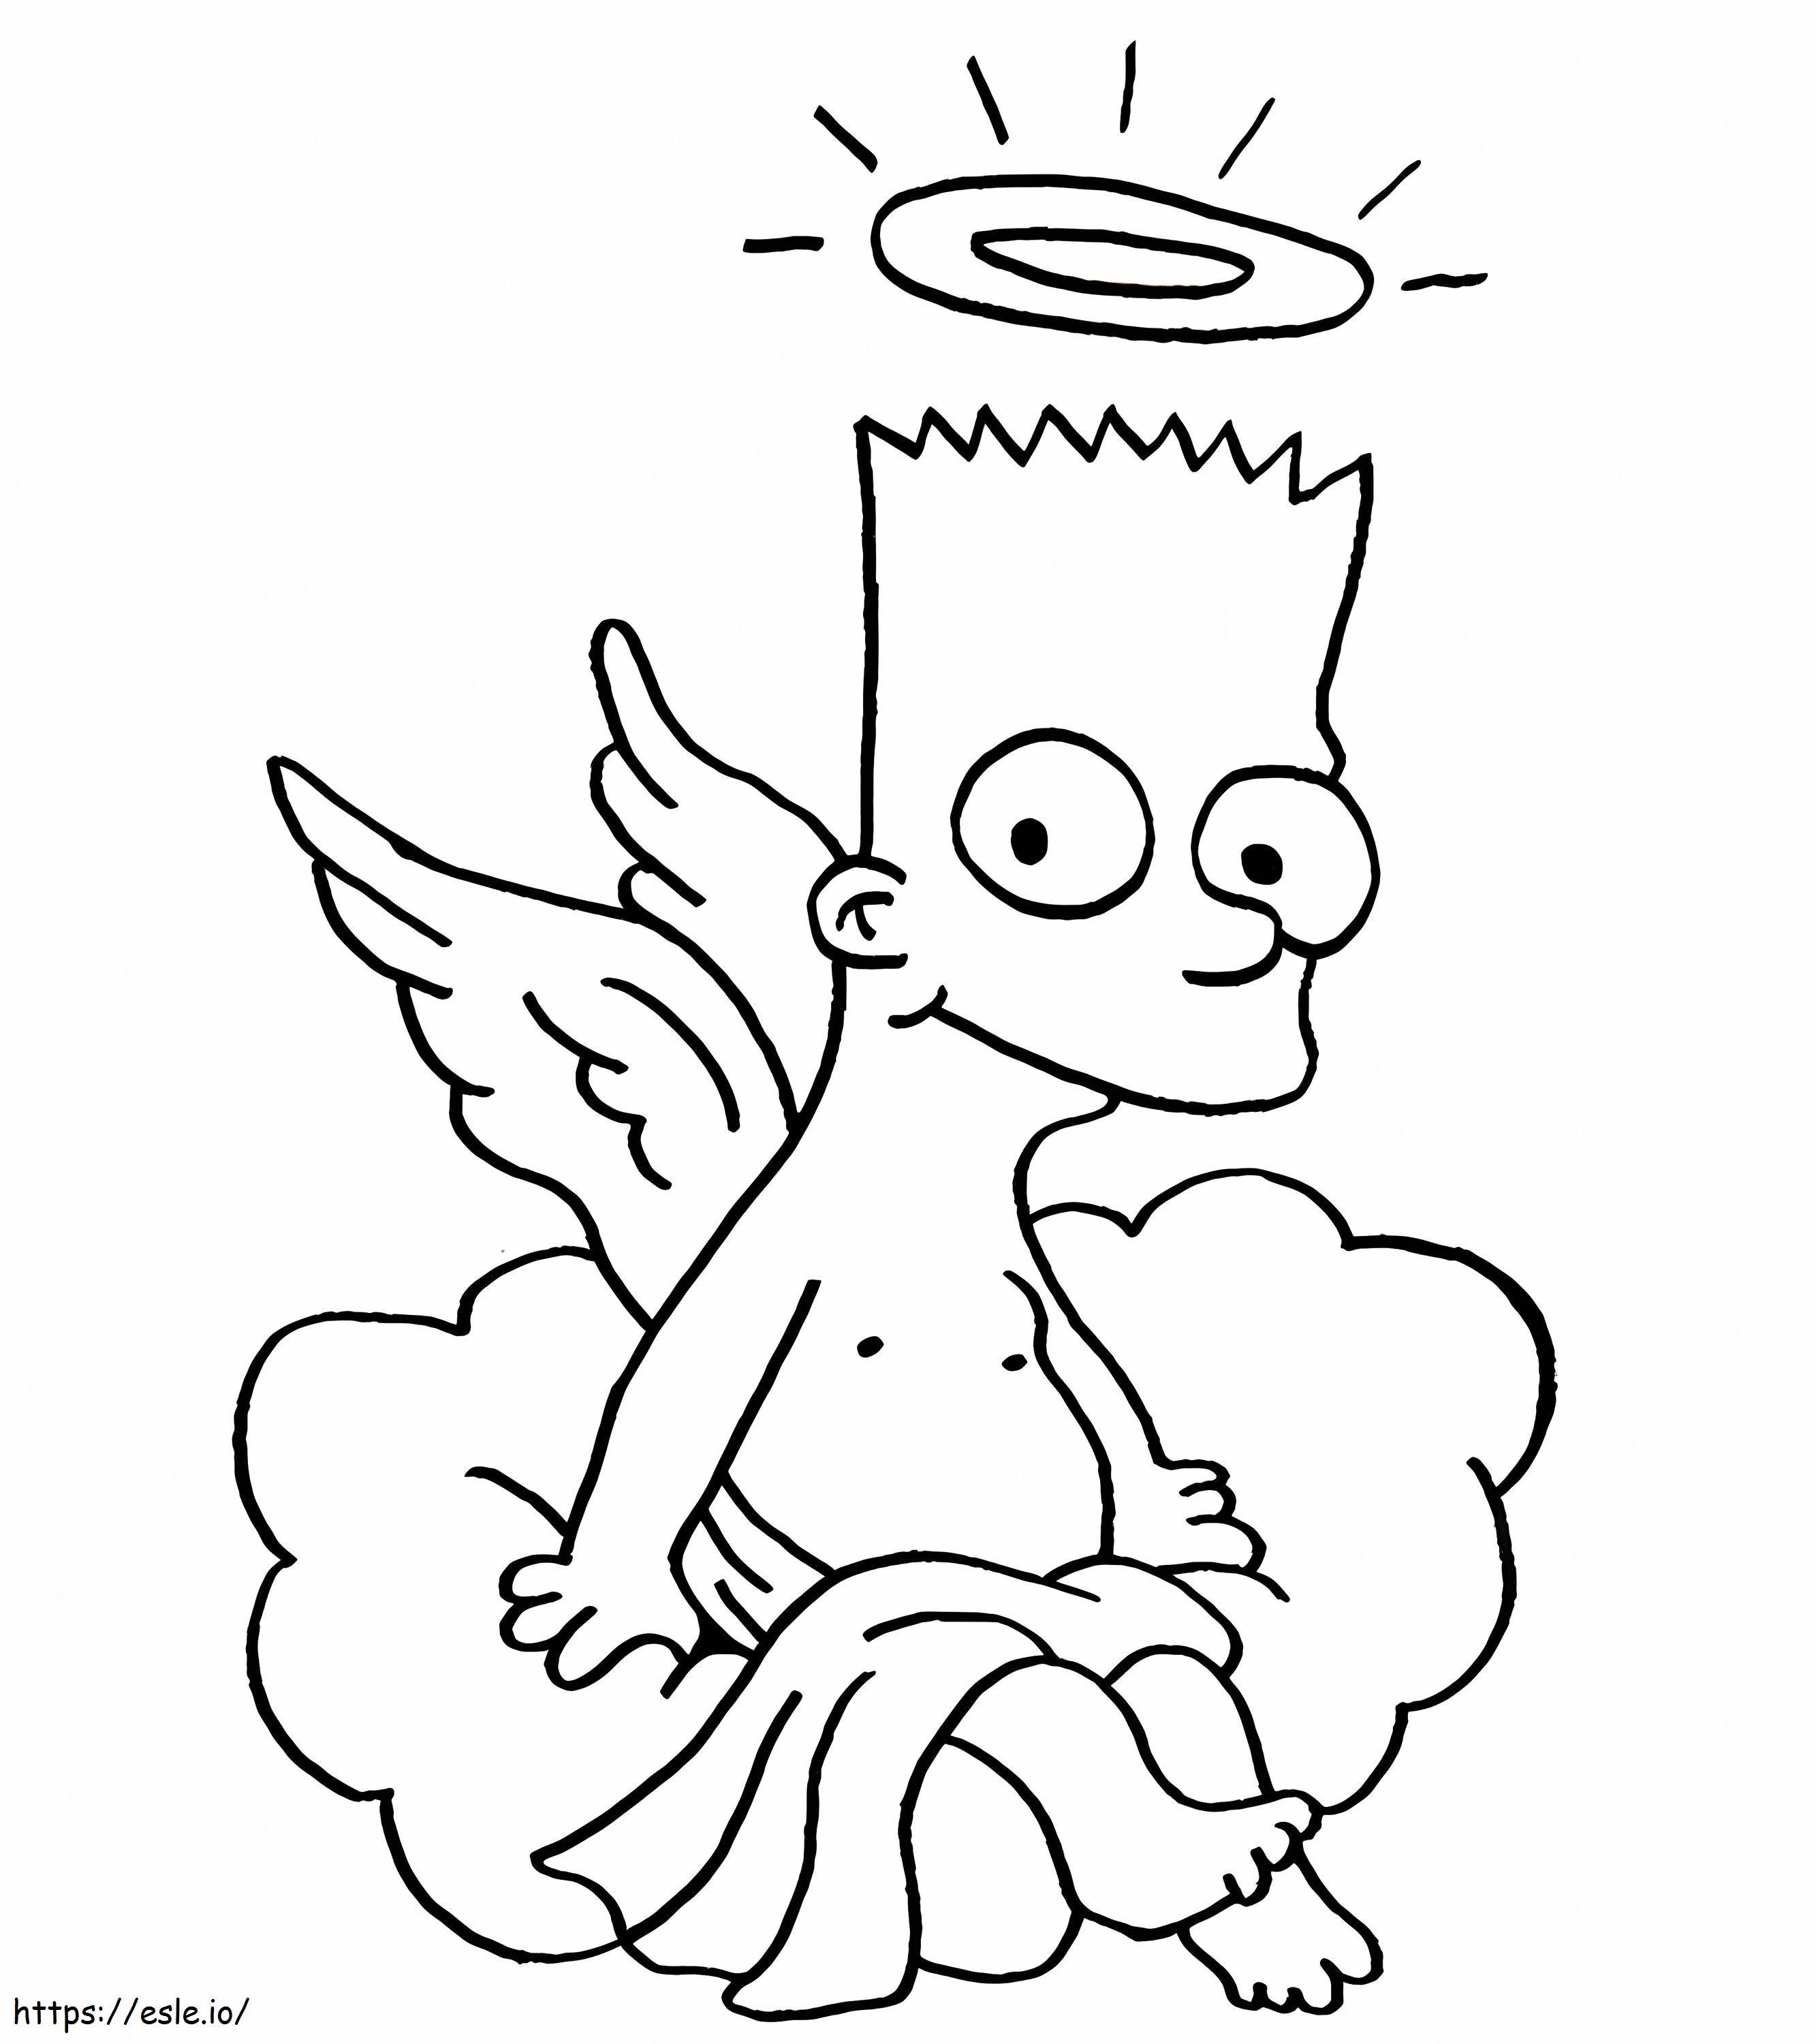 Leuke Bart Simpson kleurplaat kleurplaat